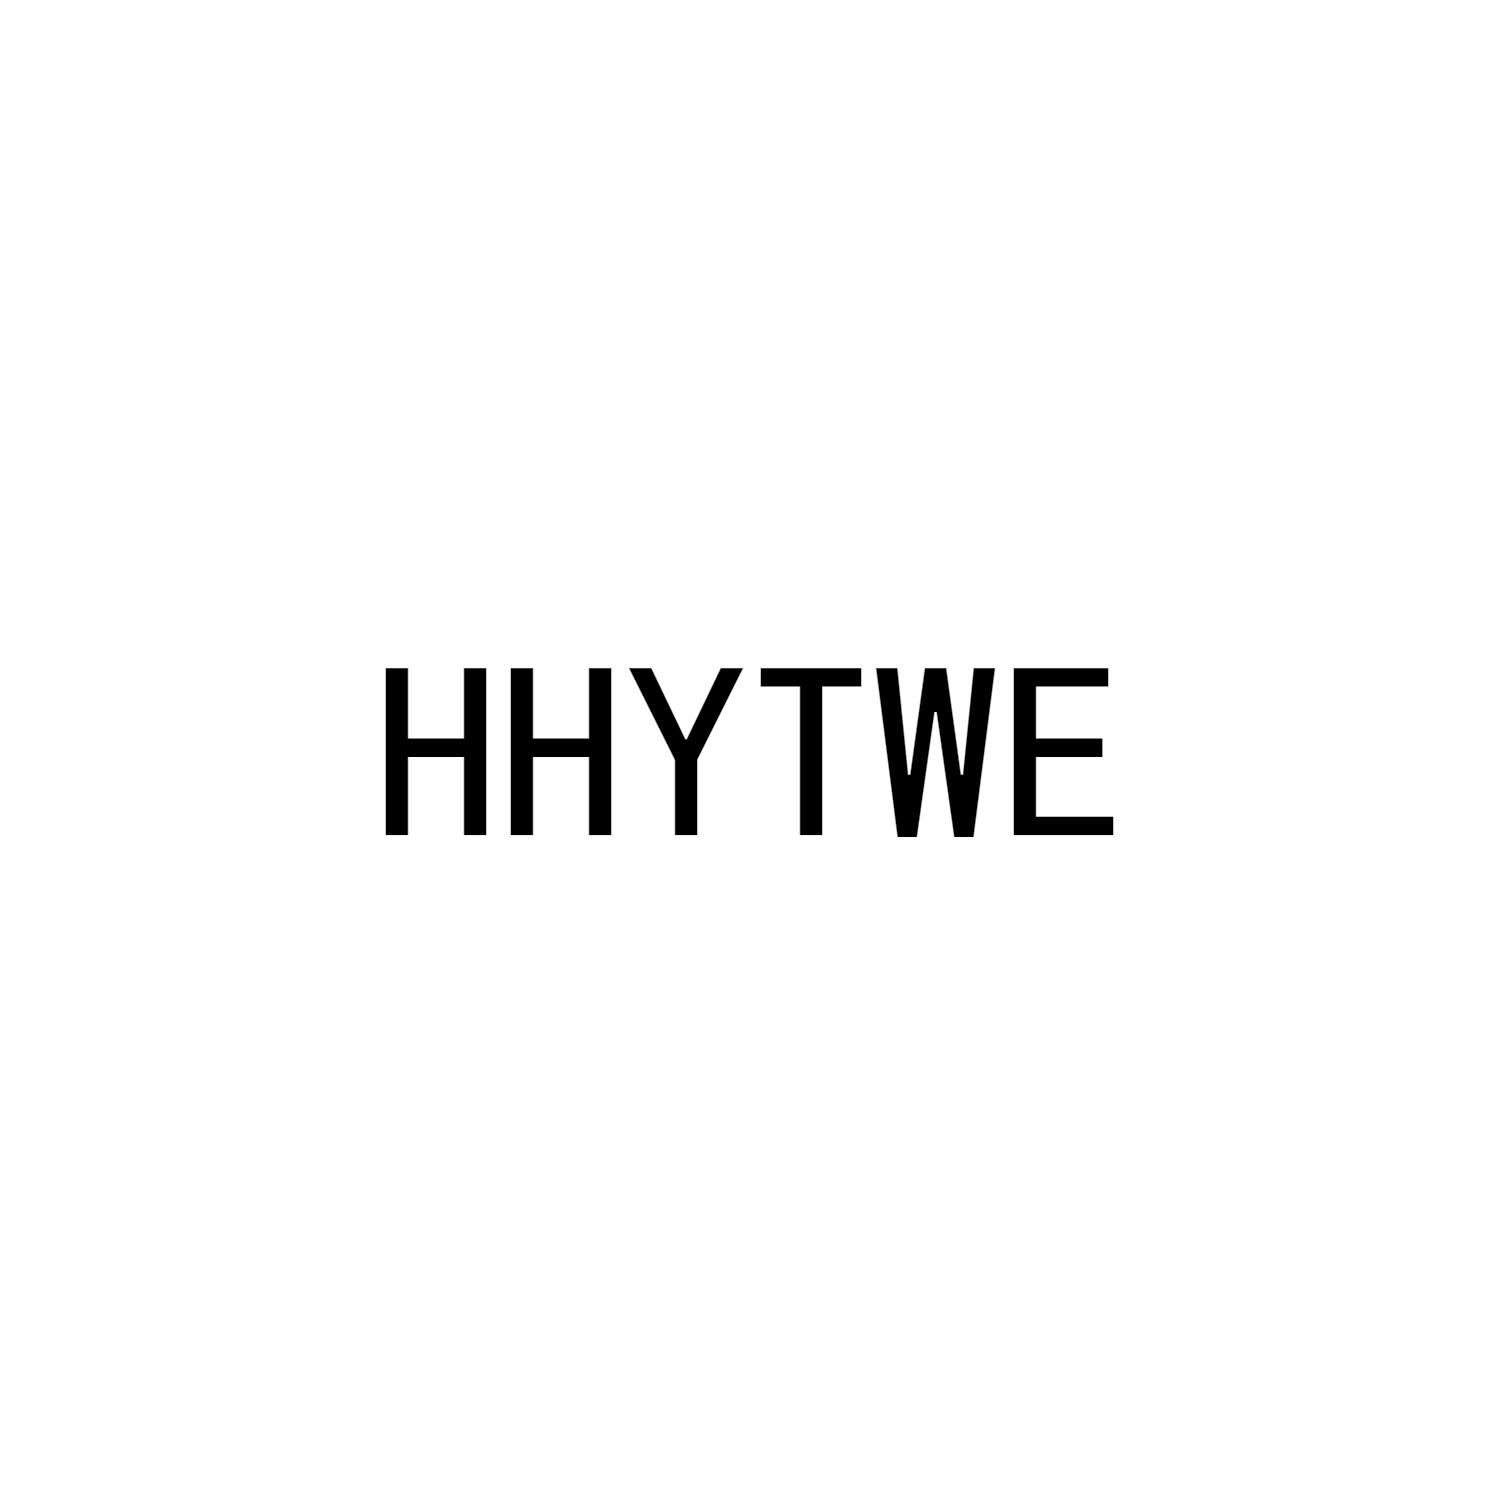 HHYTWE